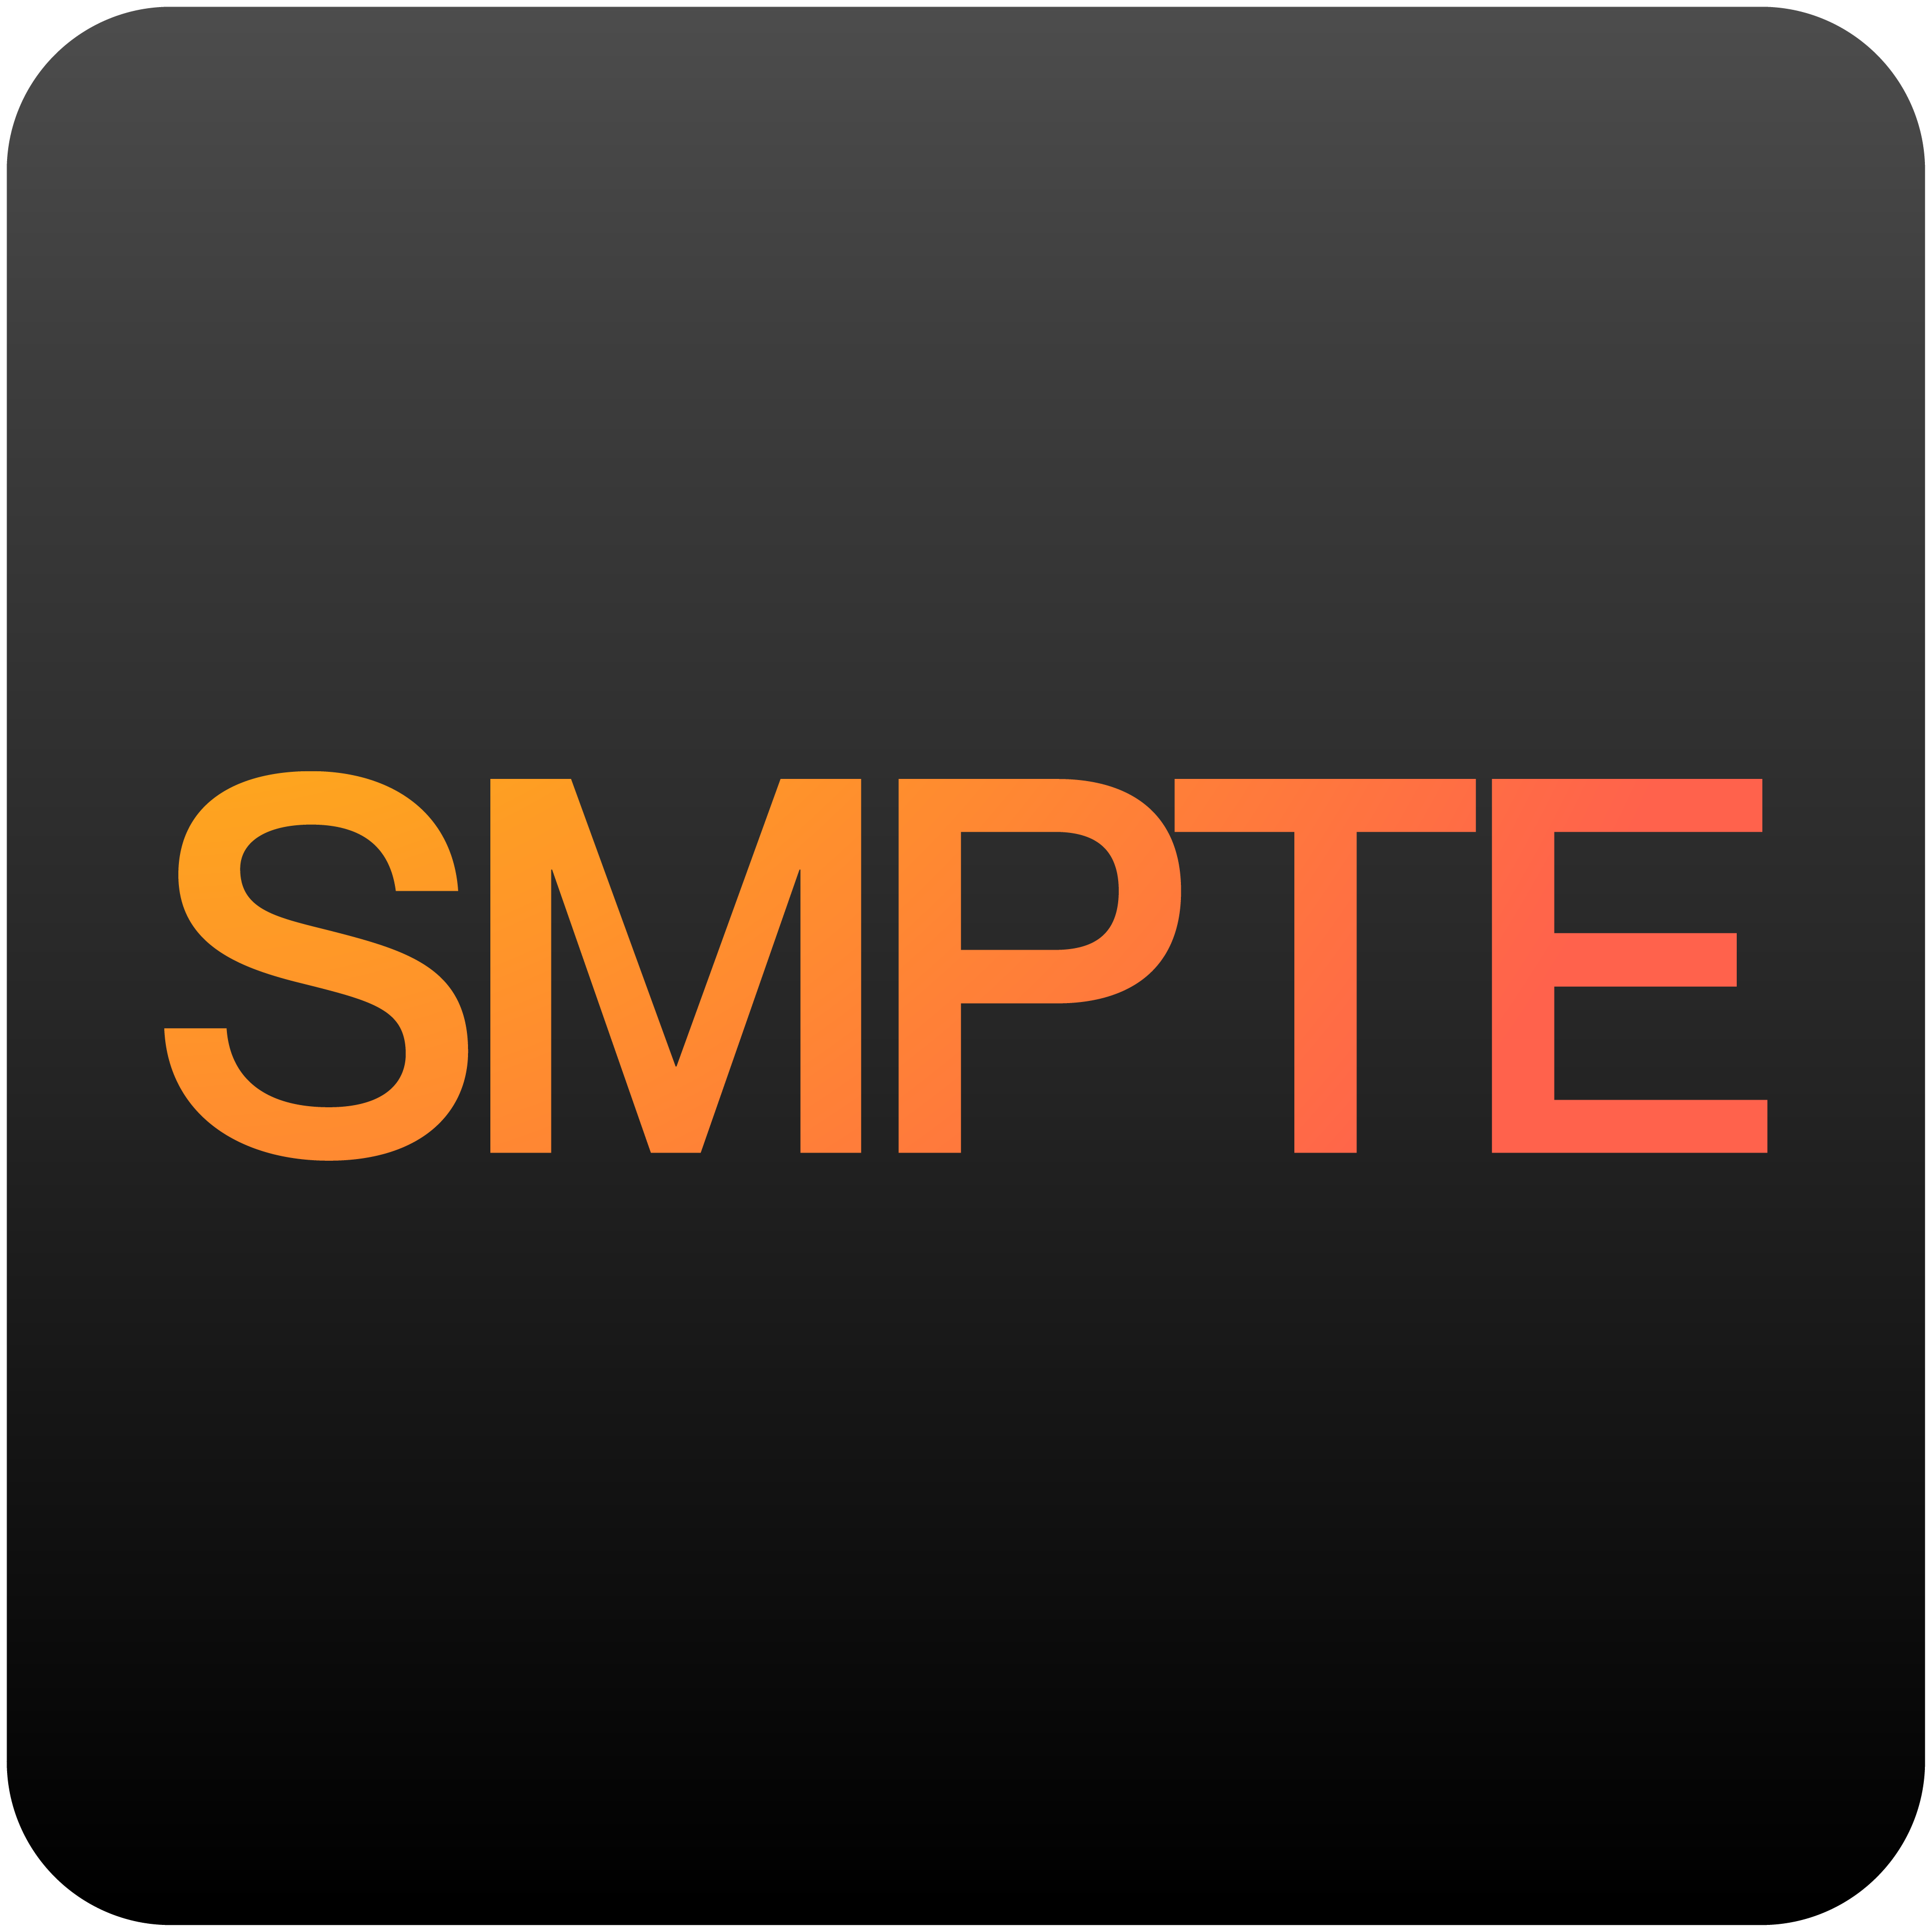 7.10 SMPTE